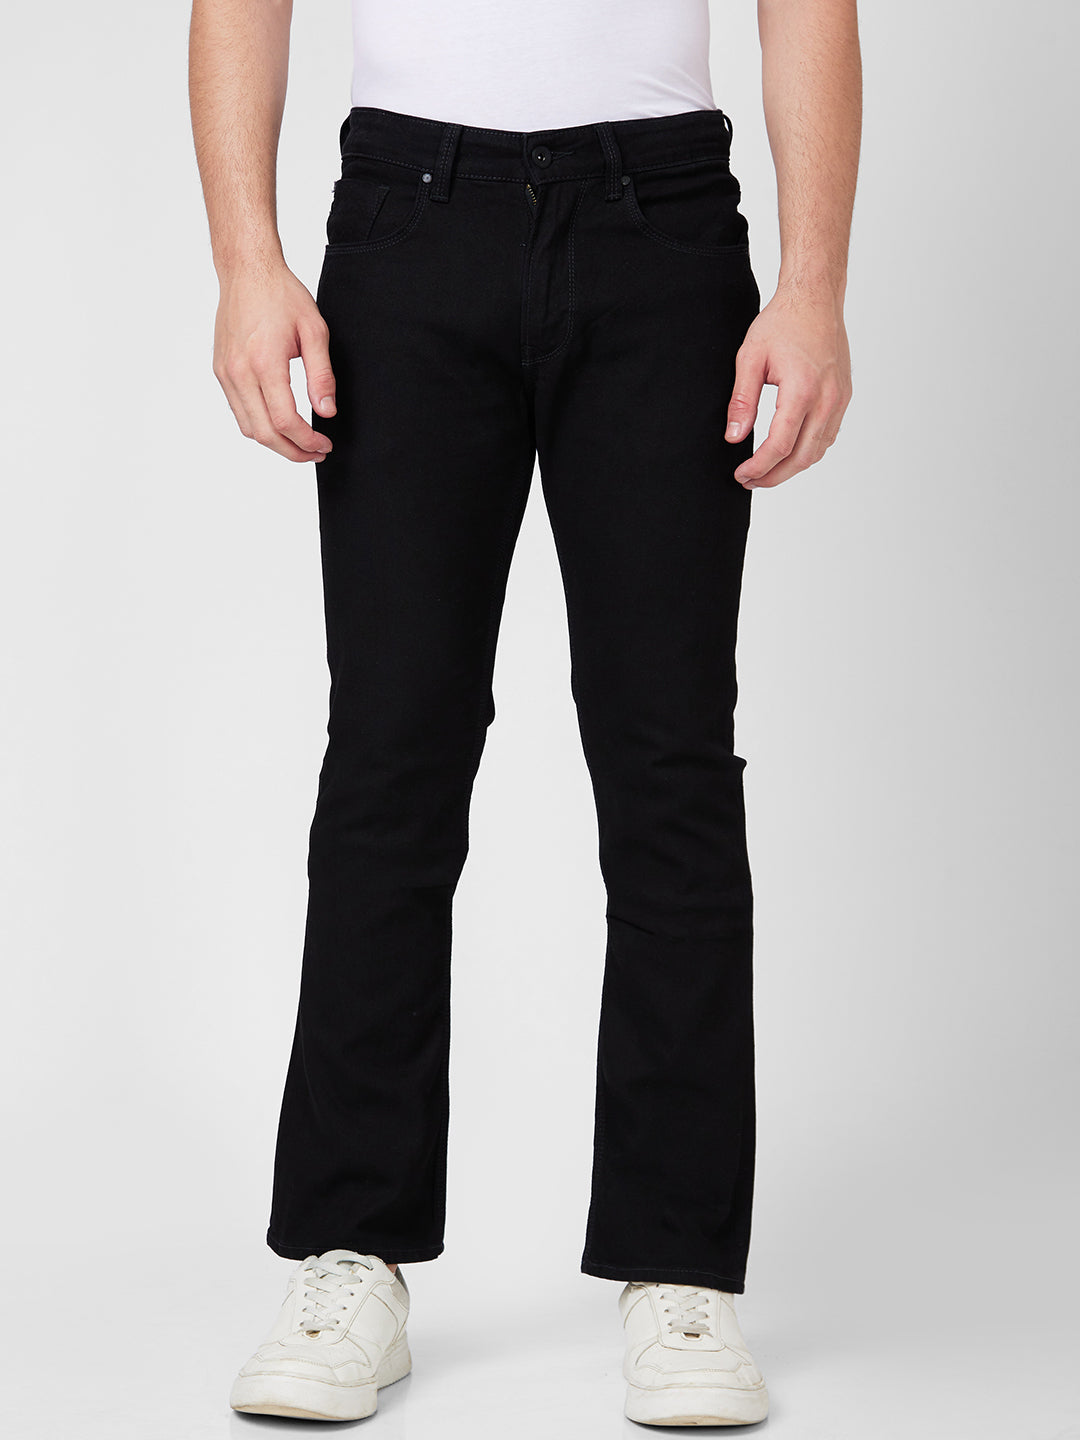 Spykar Mid Rise Comfort Fit Regular Length Black Jeans For Men